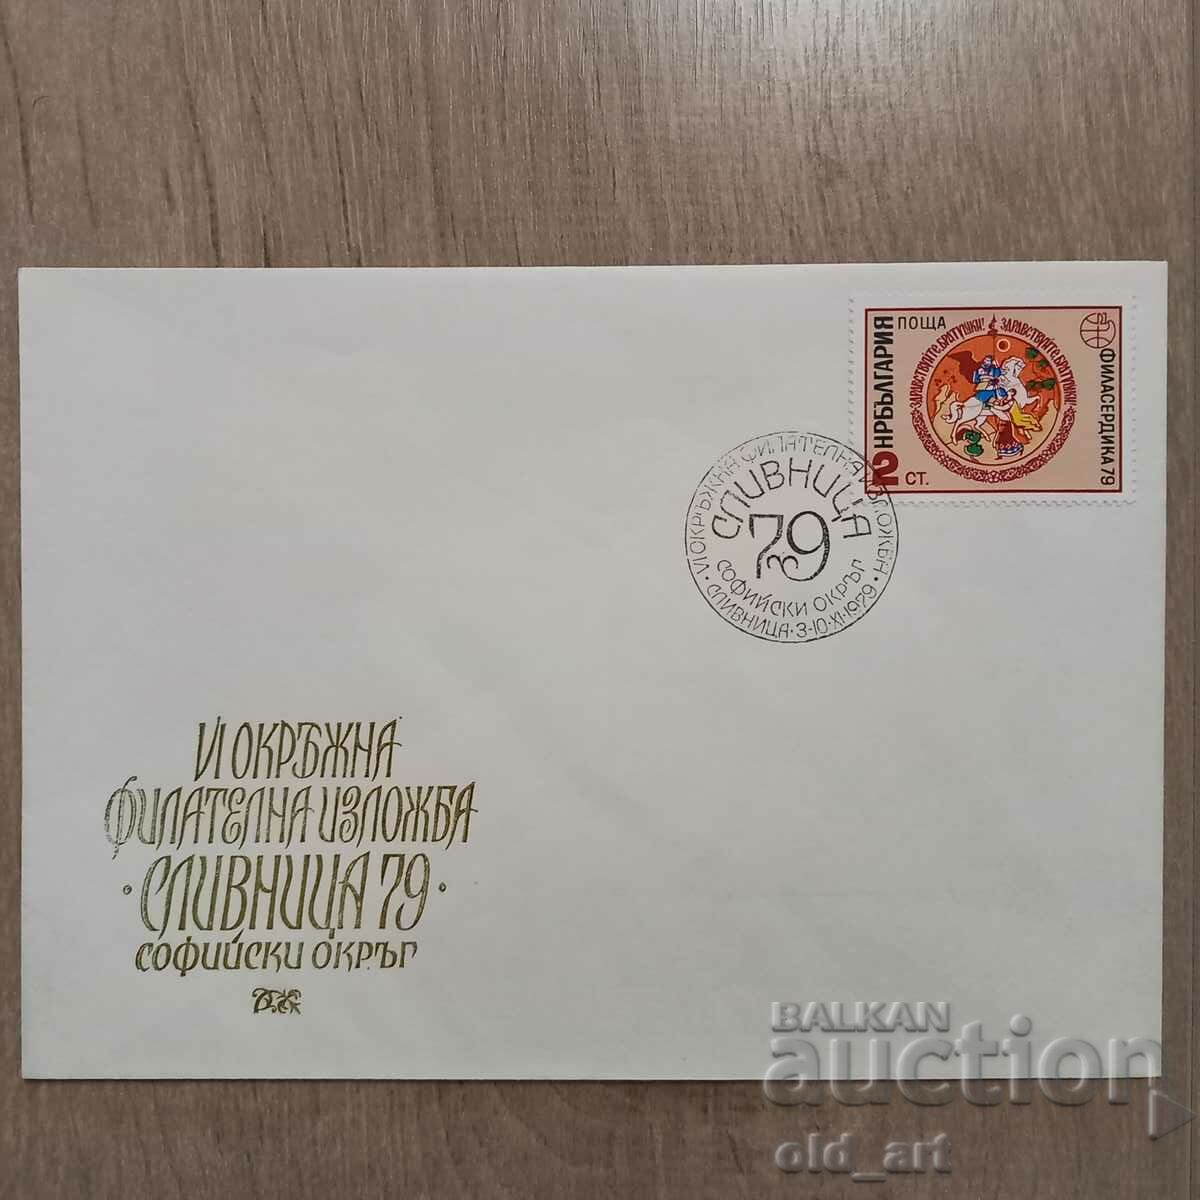 Postal envelope - 6th District Philatelic Exhibition Slivnitsa 79